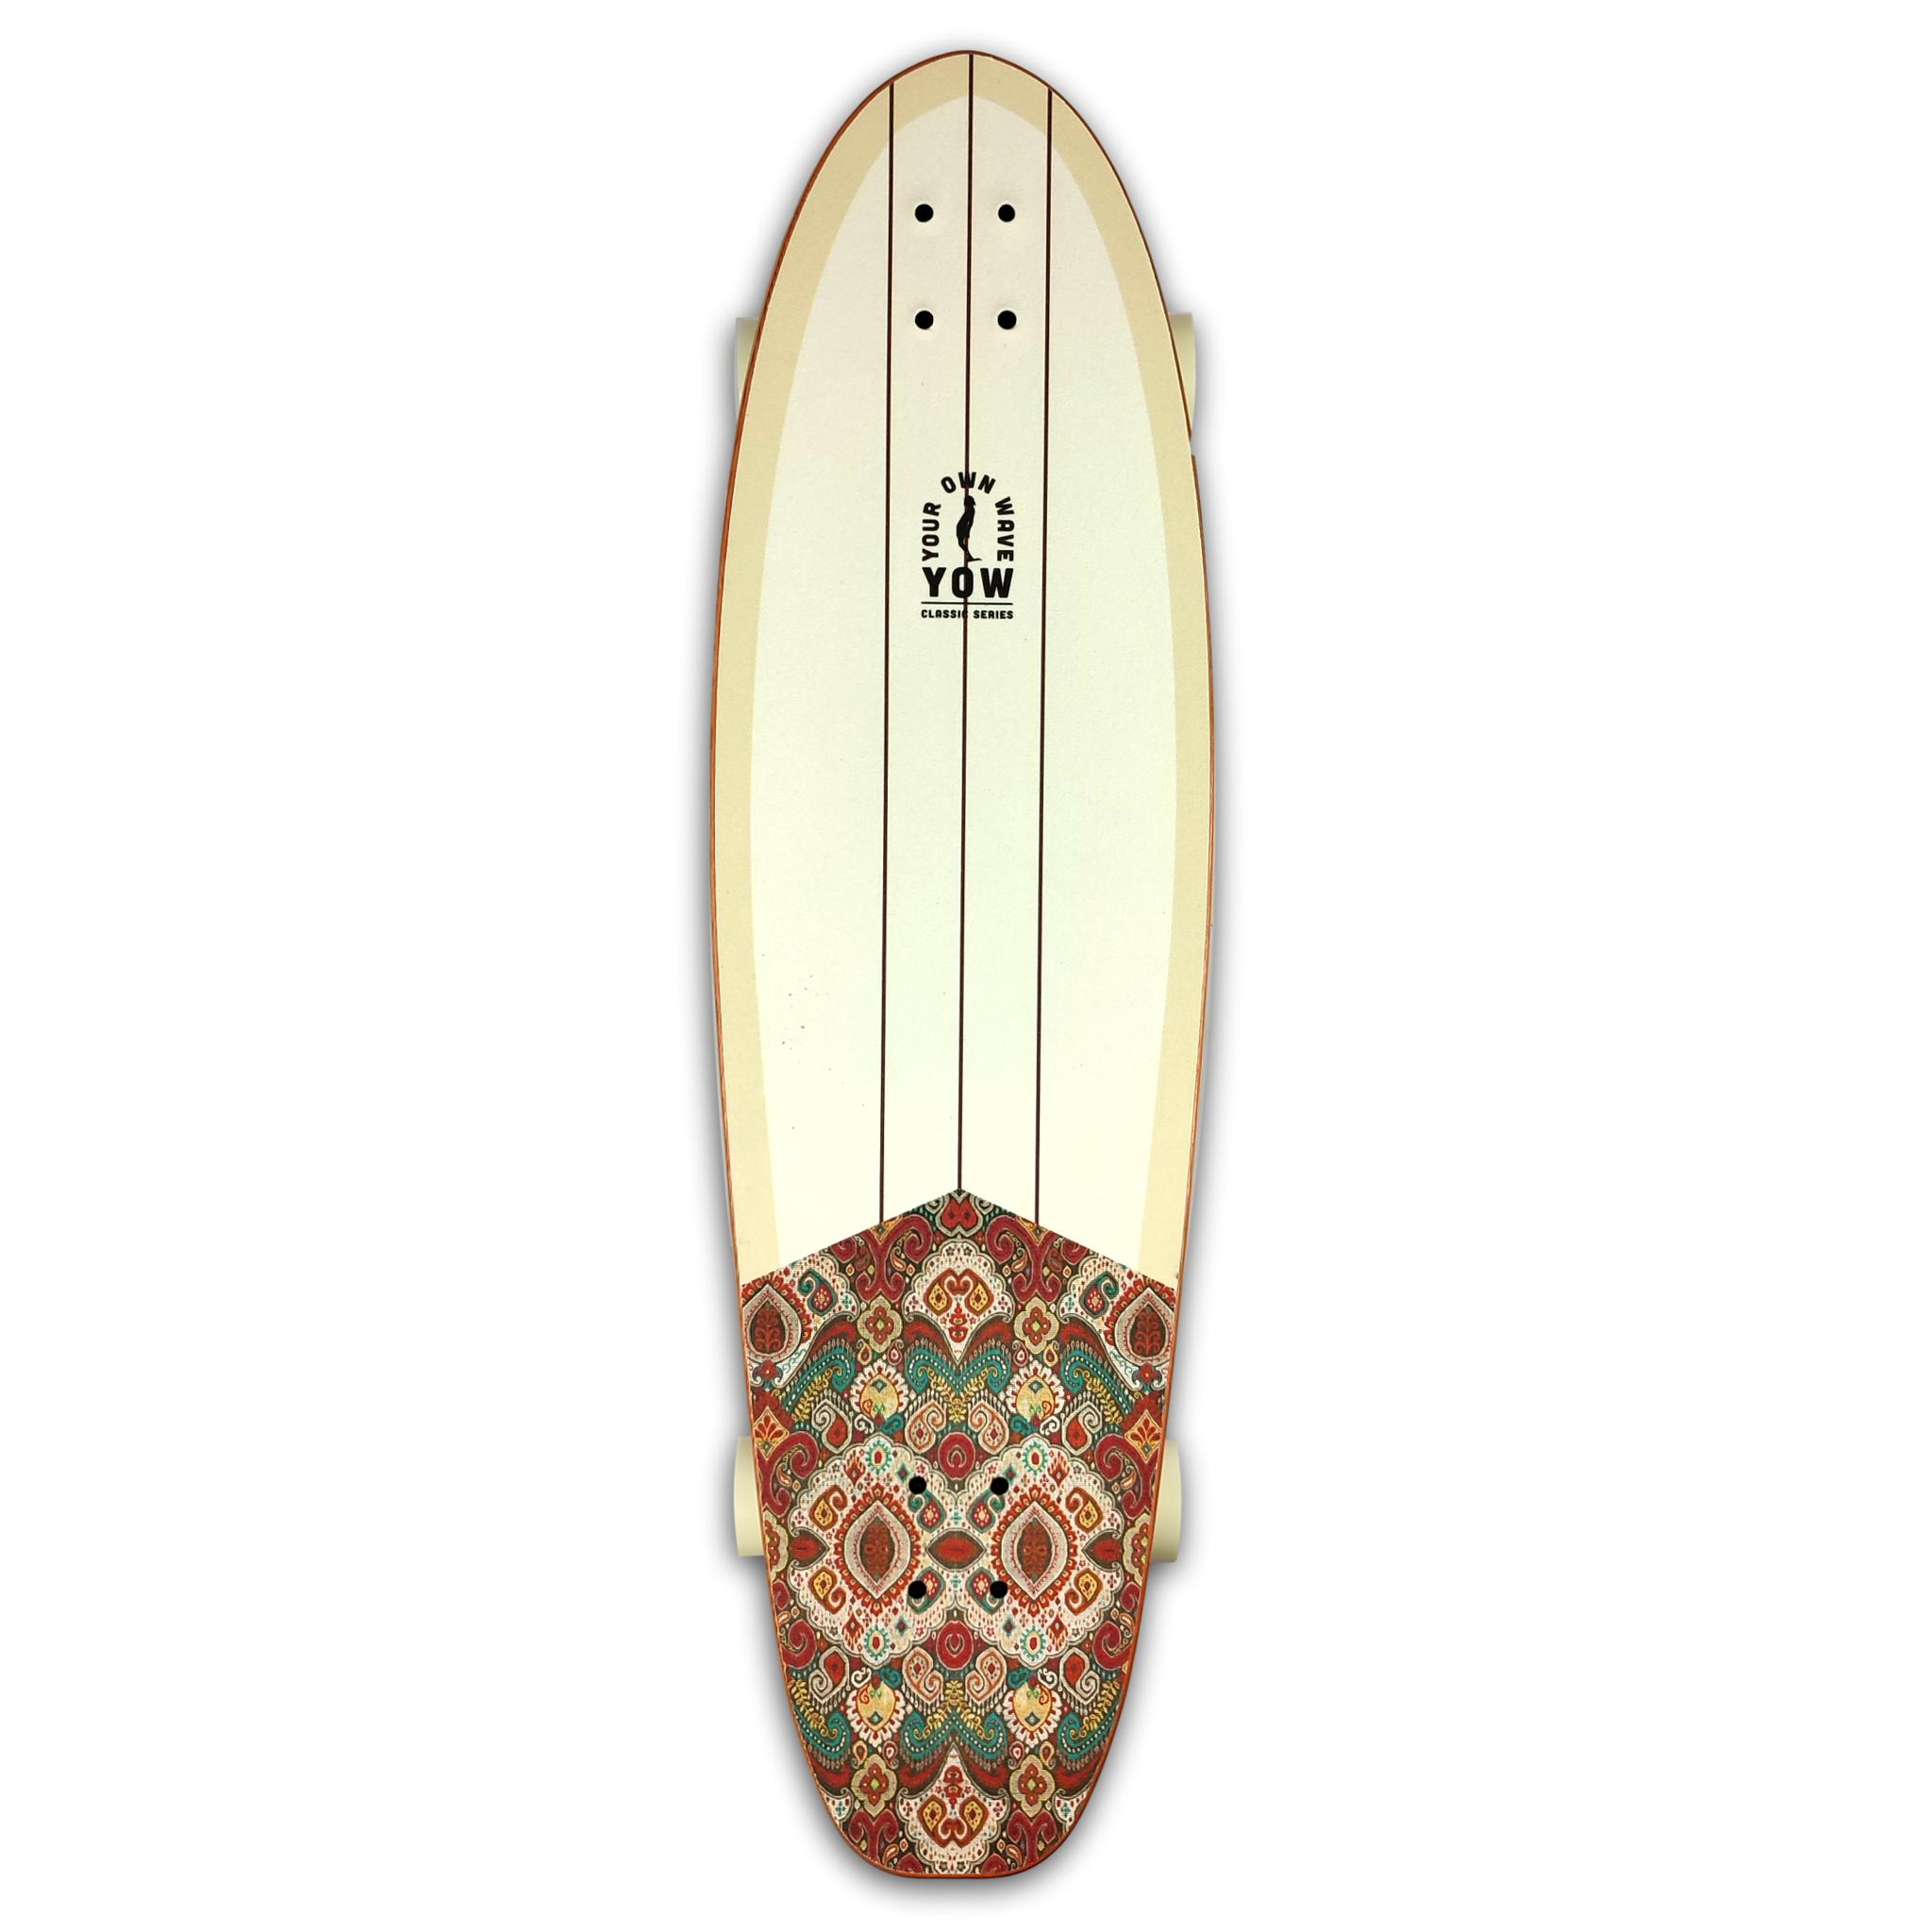 YOW SKATE SURF MALIBU 36